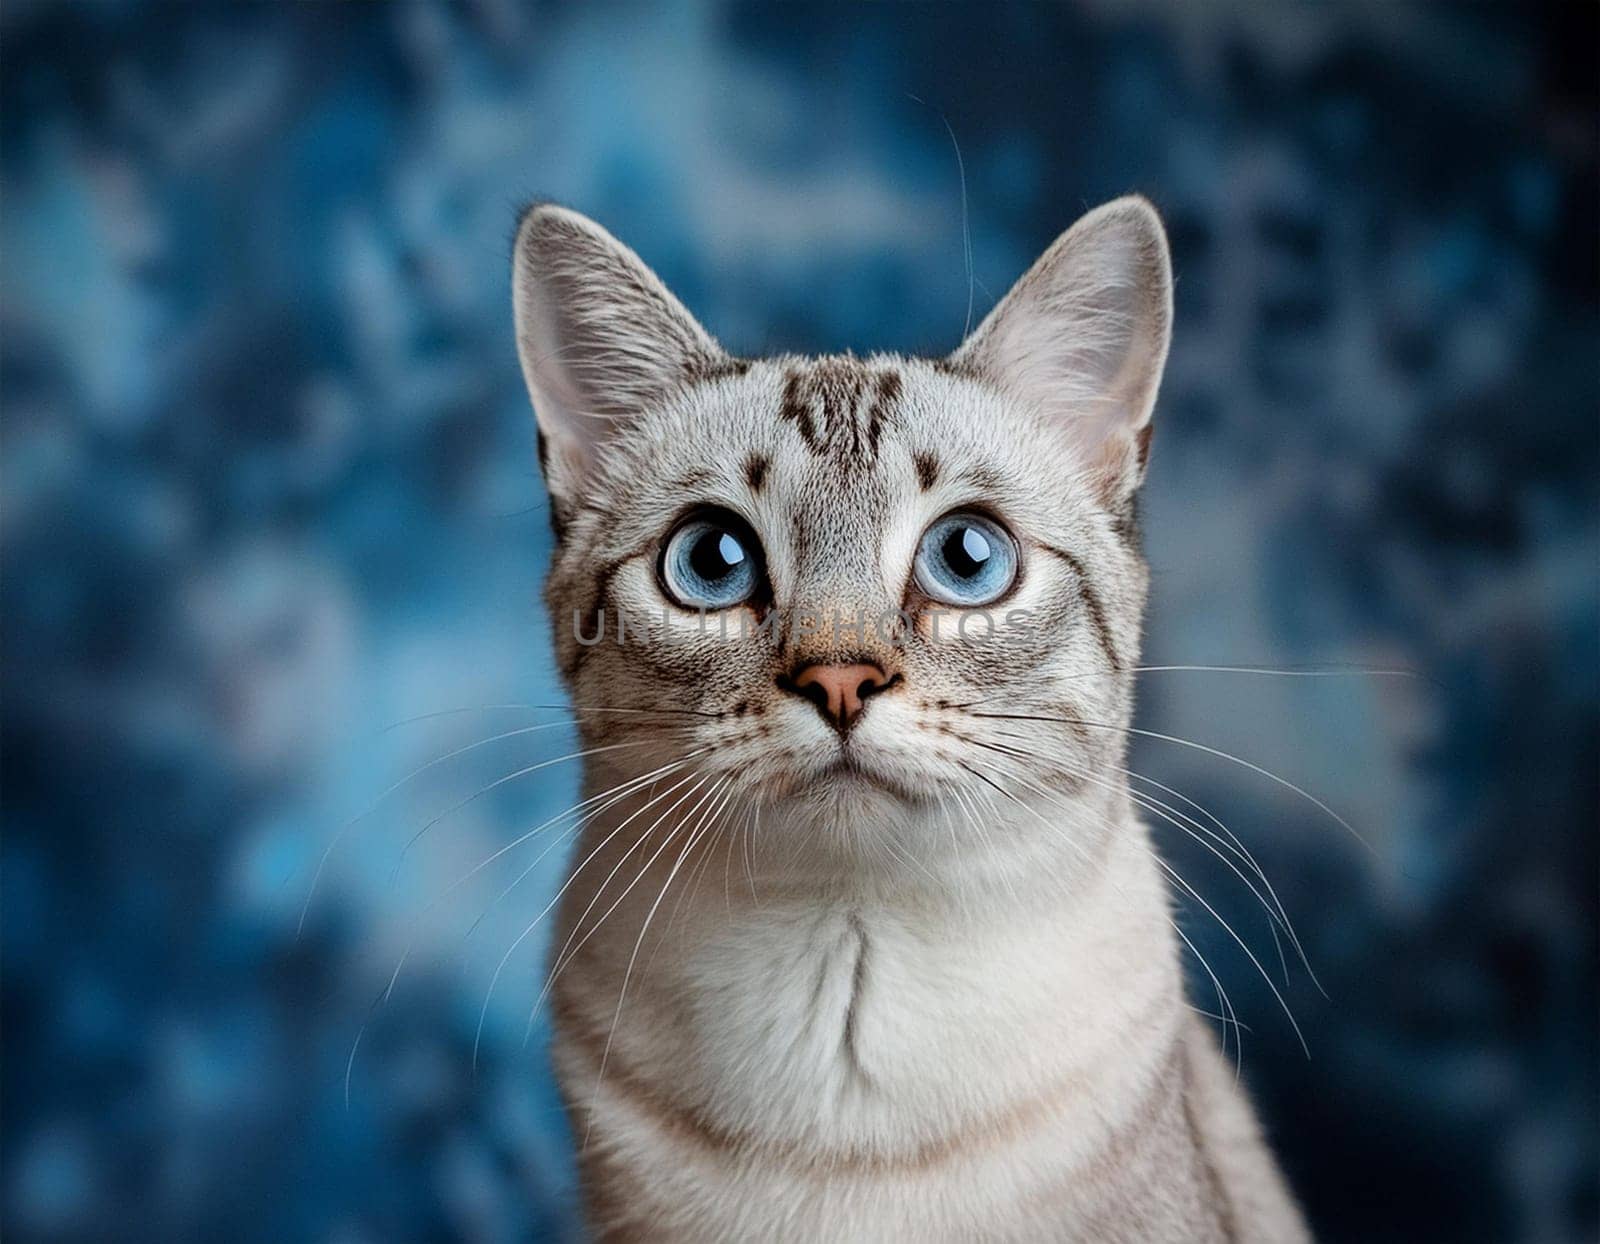 Close-up cat portrait against futuristic blue background by JFsPic